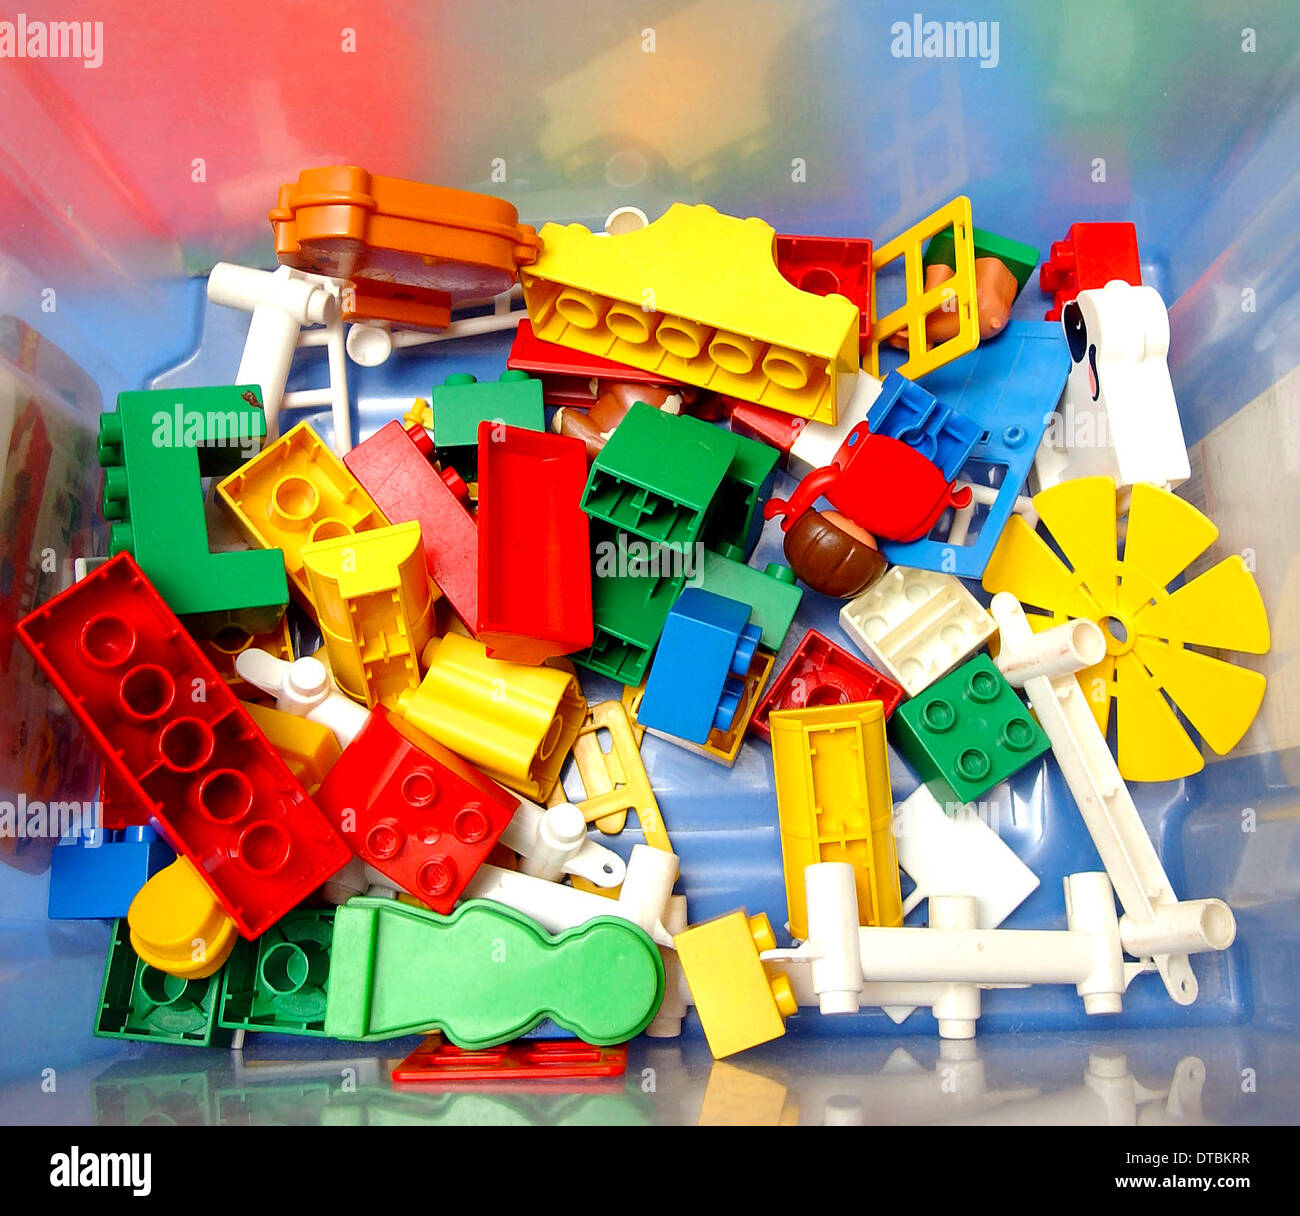 Children's Lego building blocks Stock Photo